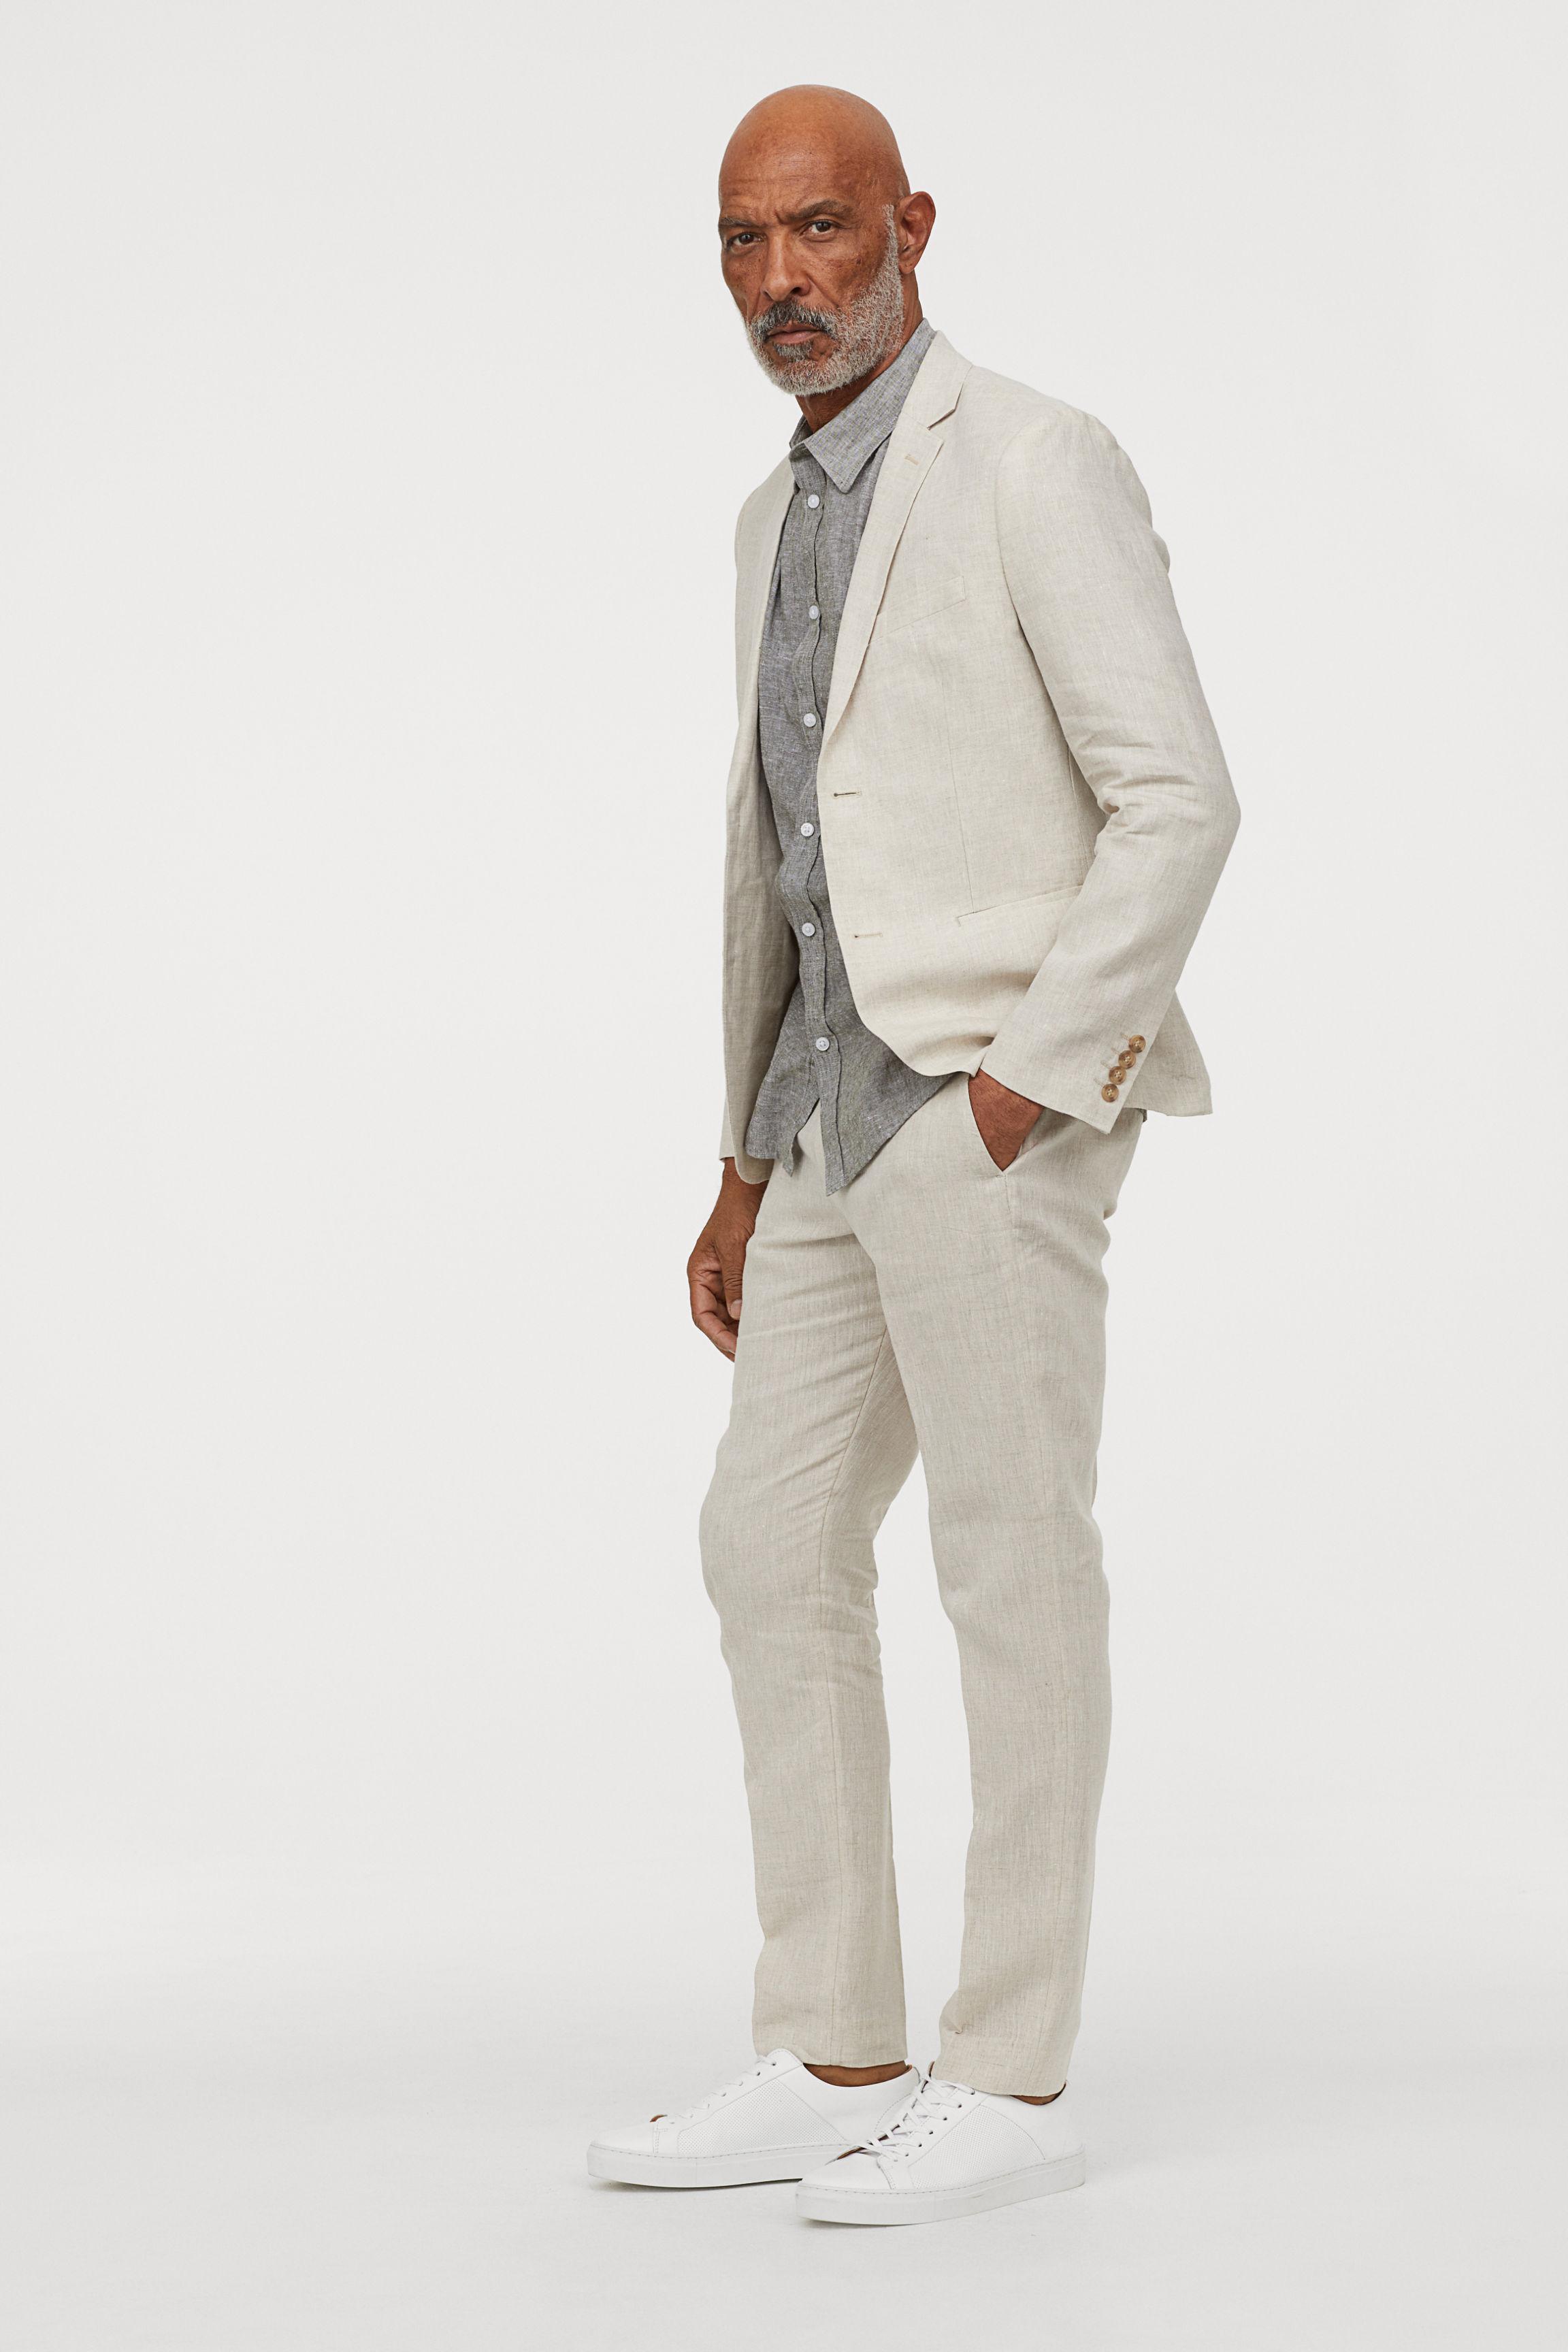 H&M Slim Fit Linen Suit Pants in White for Men - Lyst